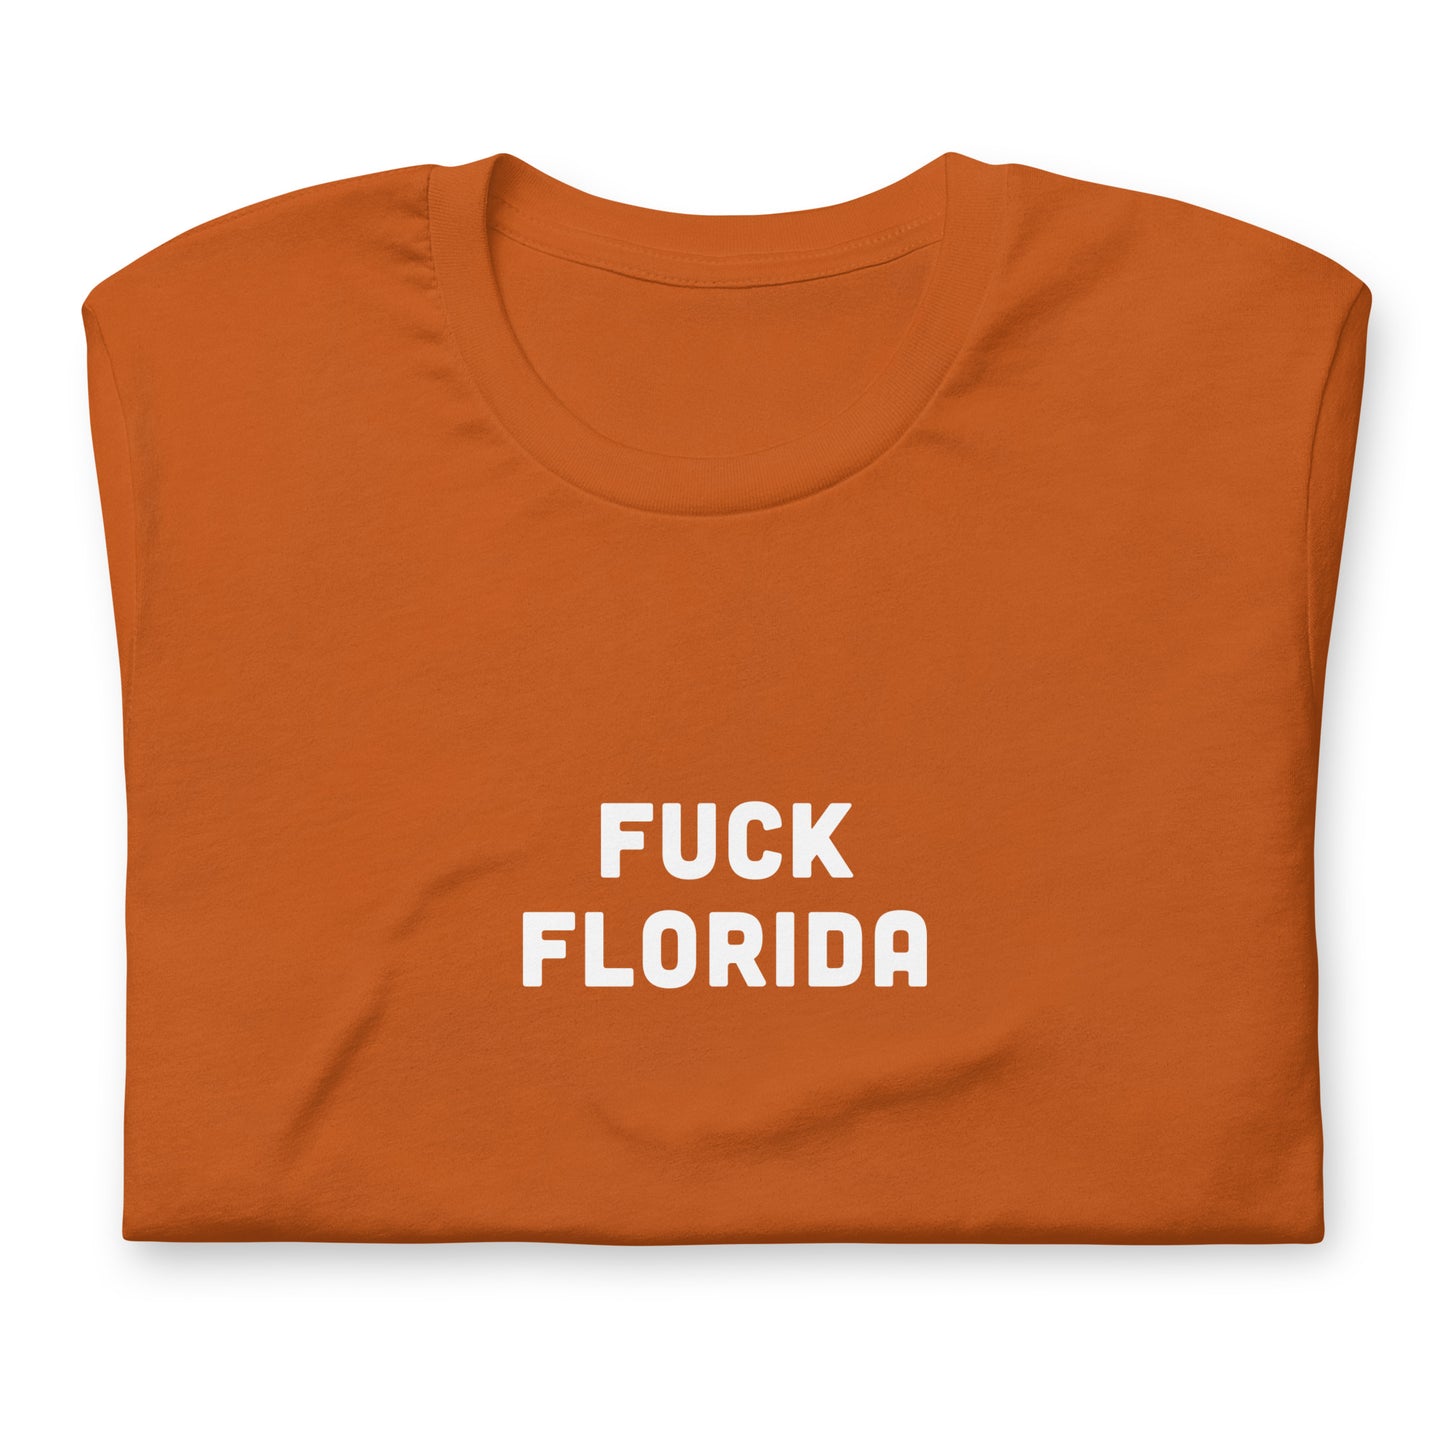 Fuck Florida T-Shirt Size M Color Navy